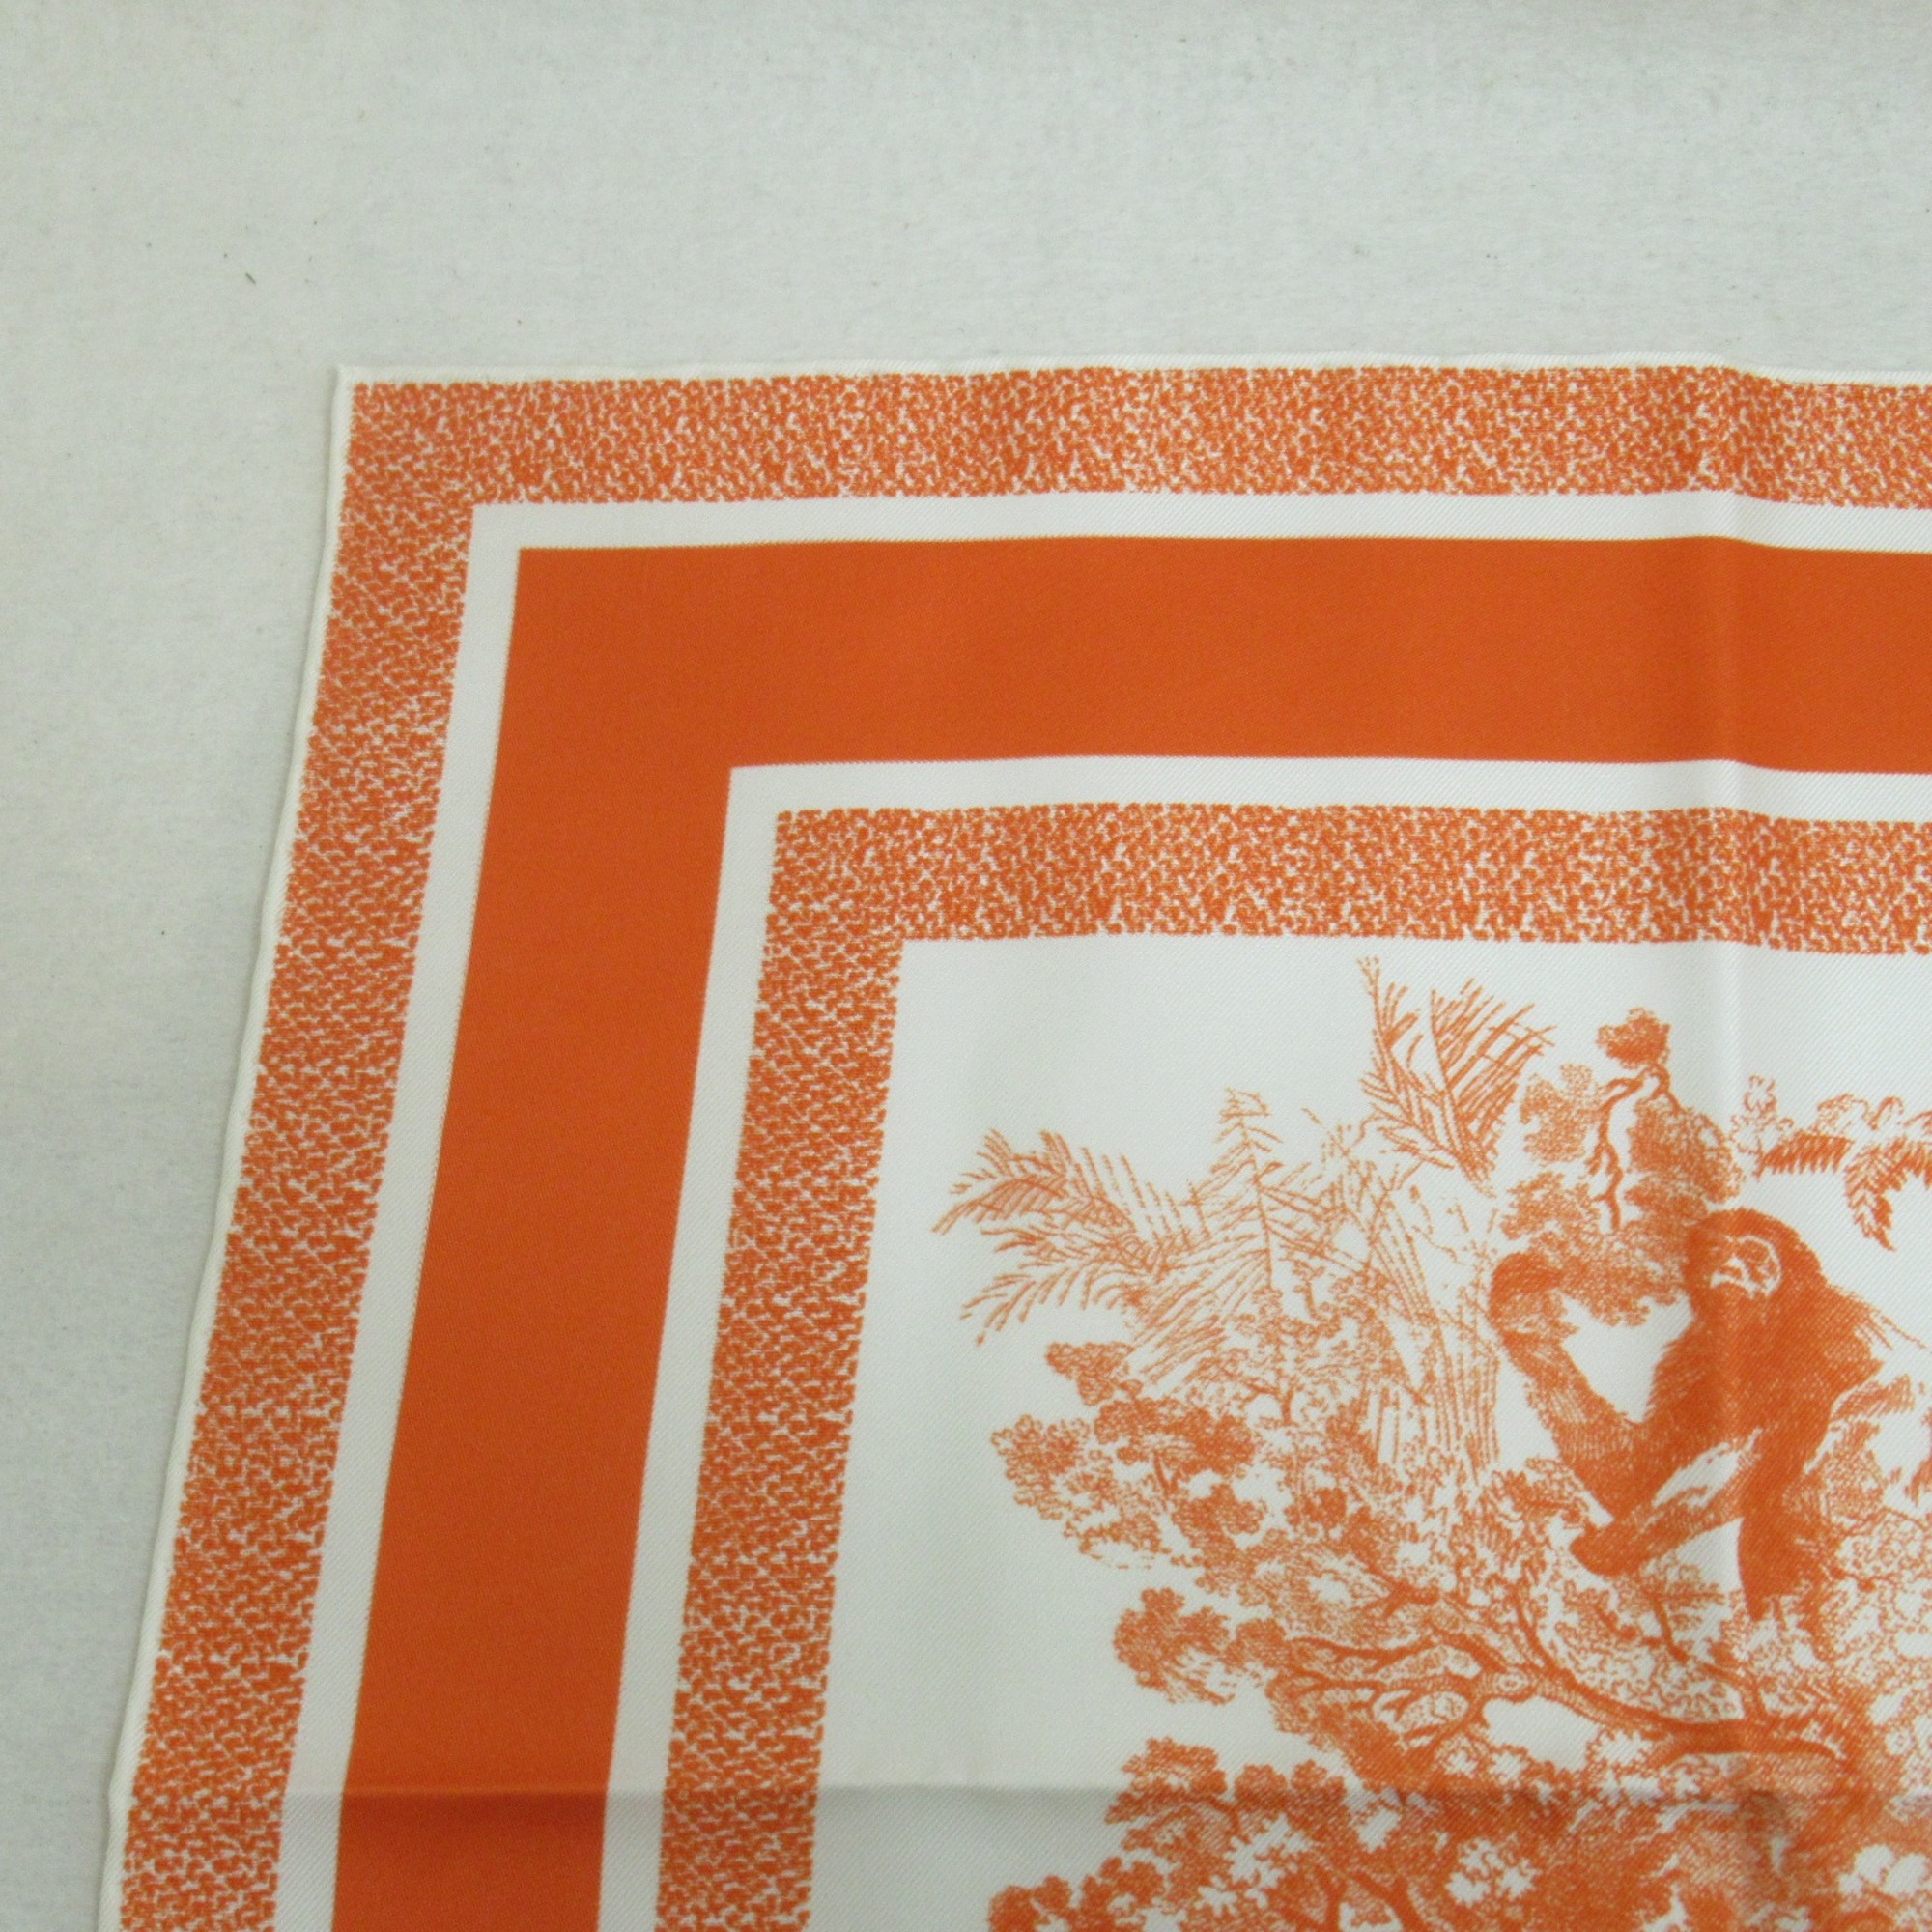 Dior scarf Orange silk 21JOU070I602246